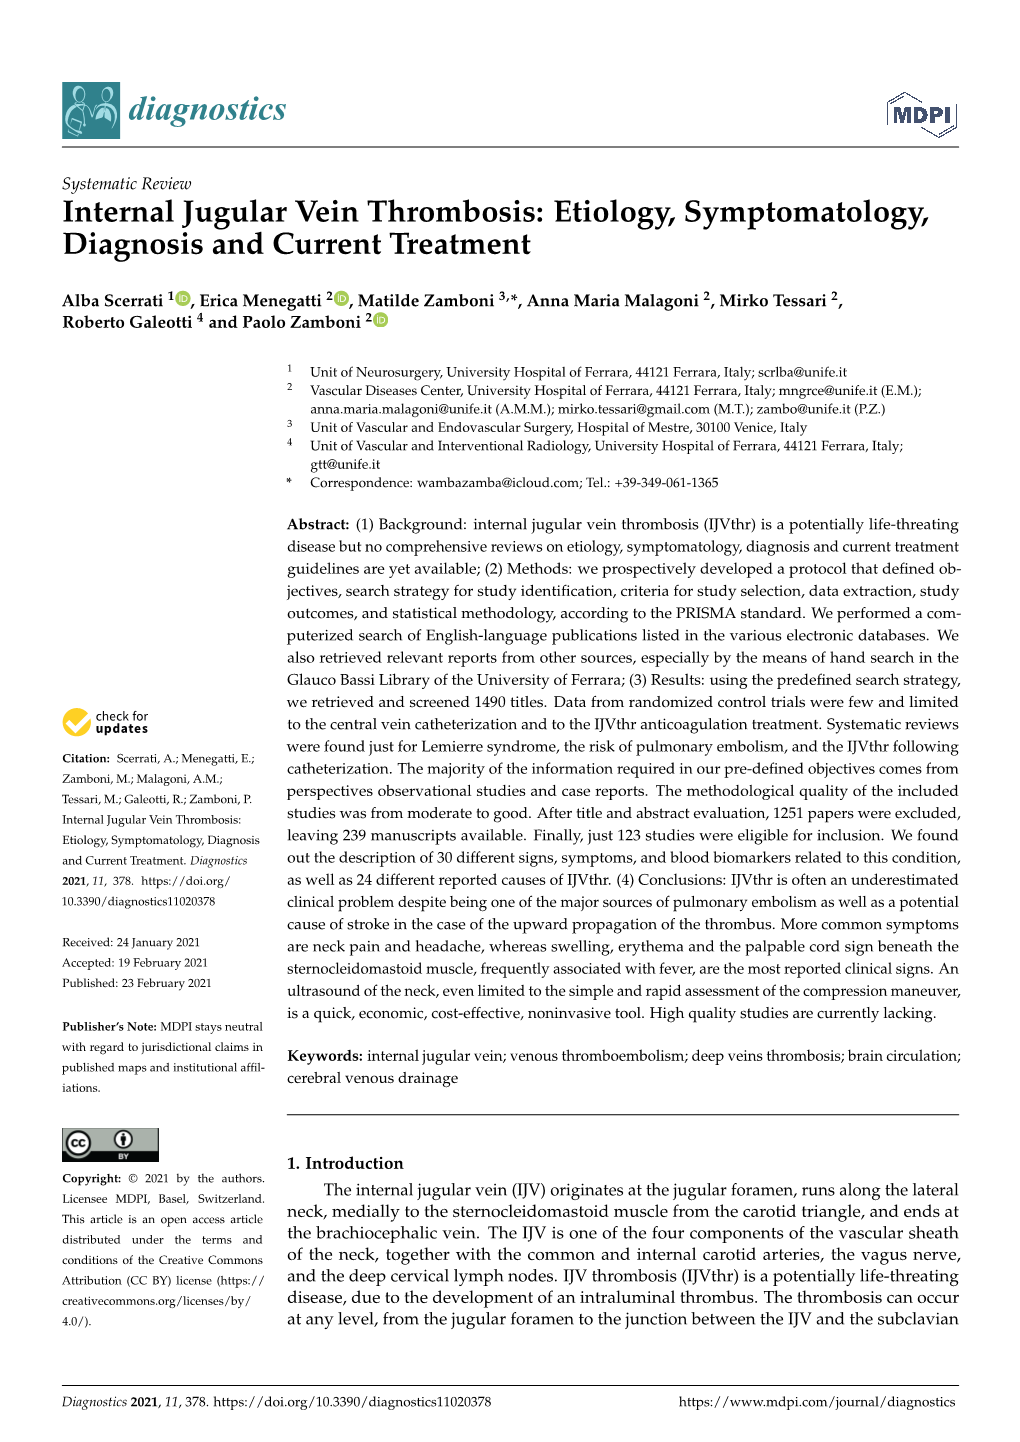 Internal Jugular Vein Thrombosis: Etiology, Symptomatology, Diagnosis and Current Treatment